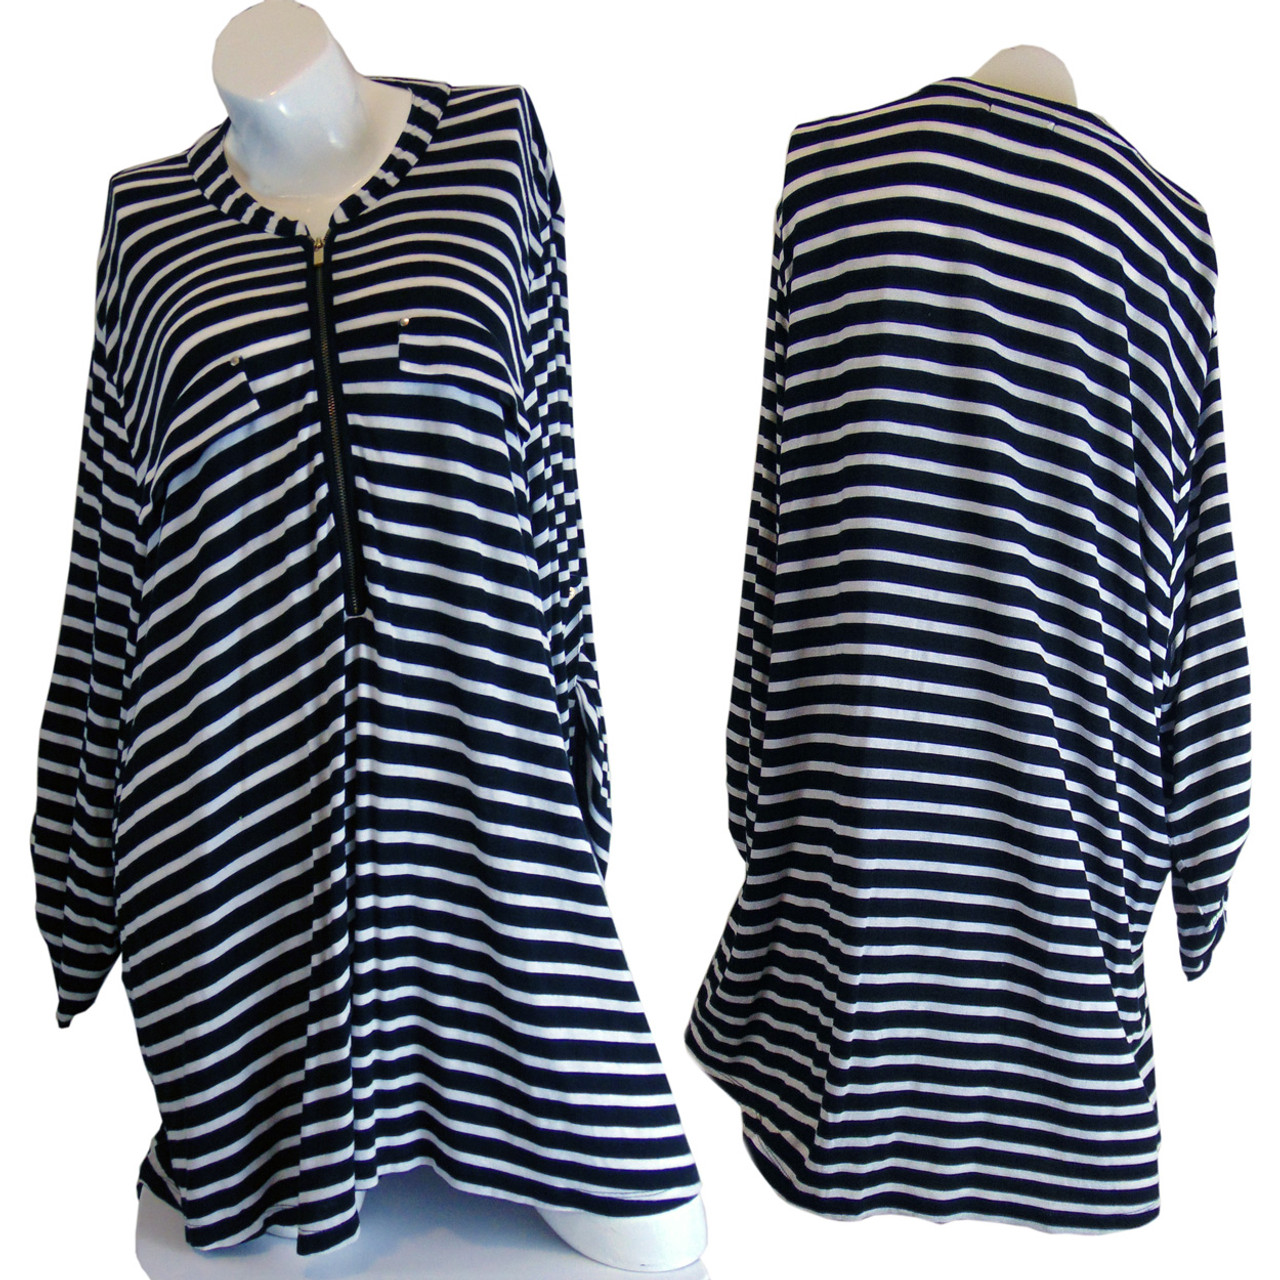 Calvin Klein Black and White Striped Dress - Tunic